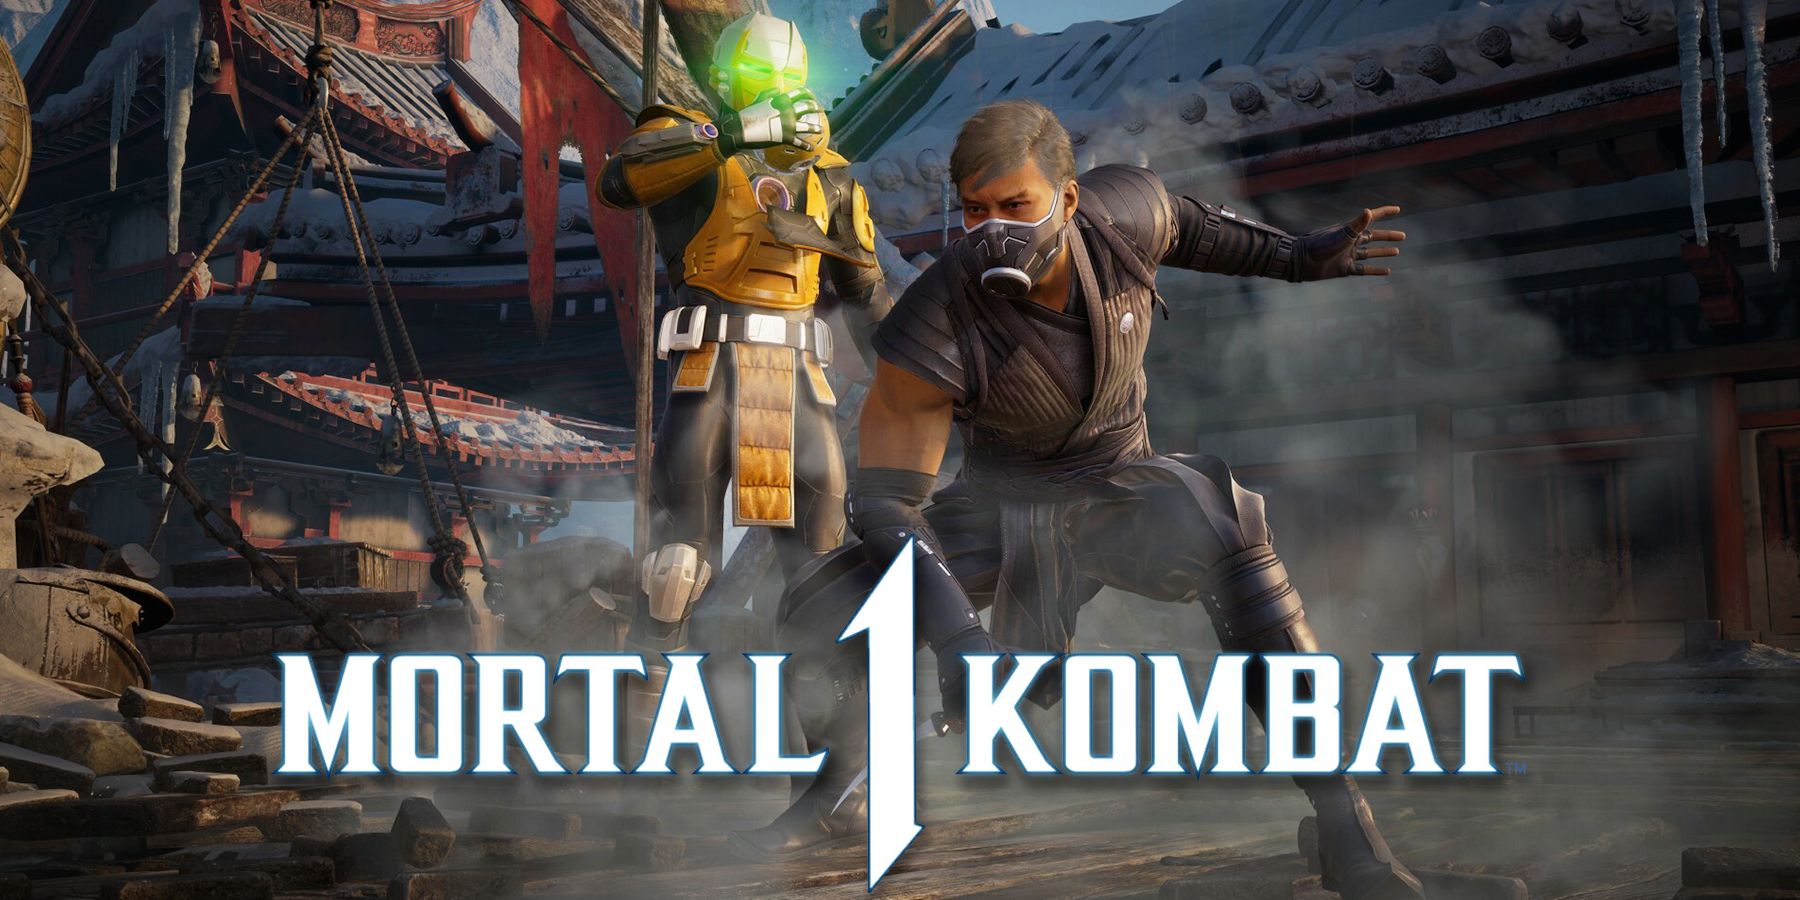 Mortal Kombat 1 Ps5 in Central Division - Video Games, Sm Games